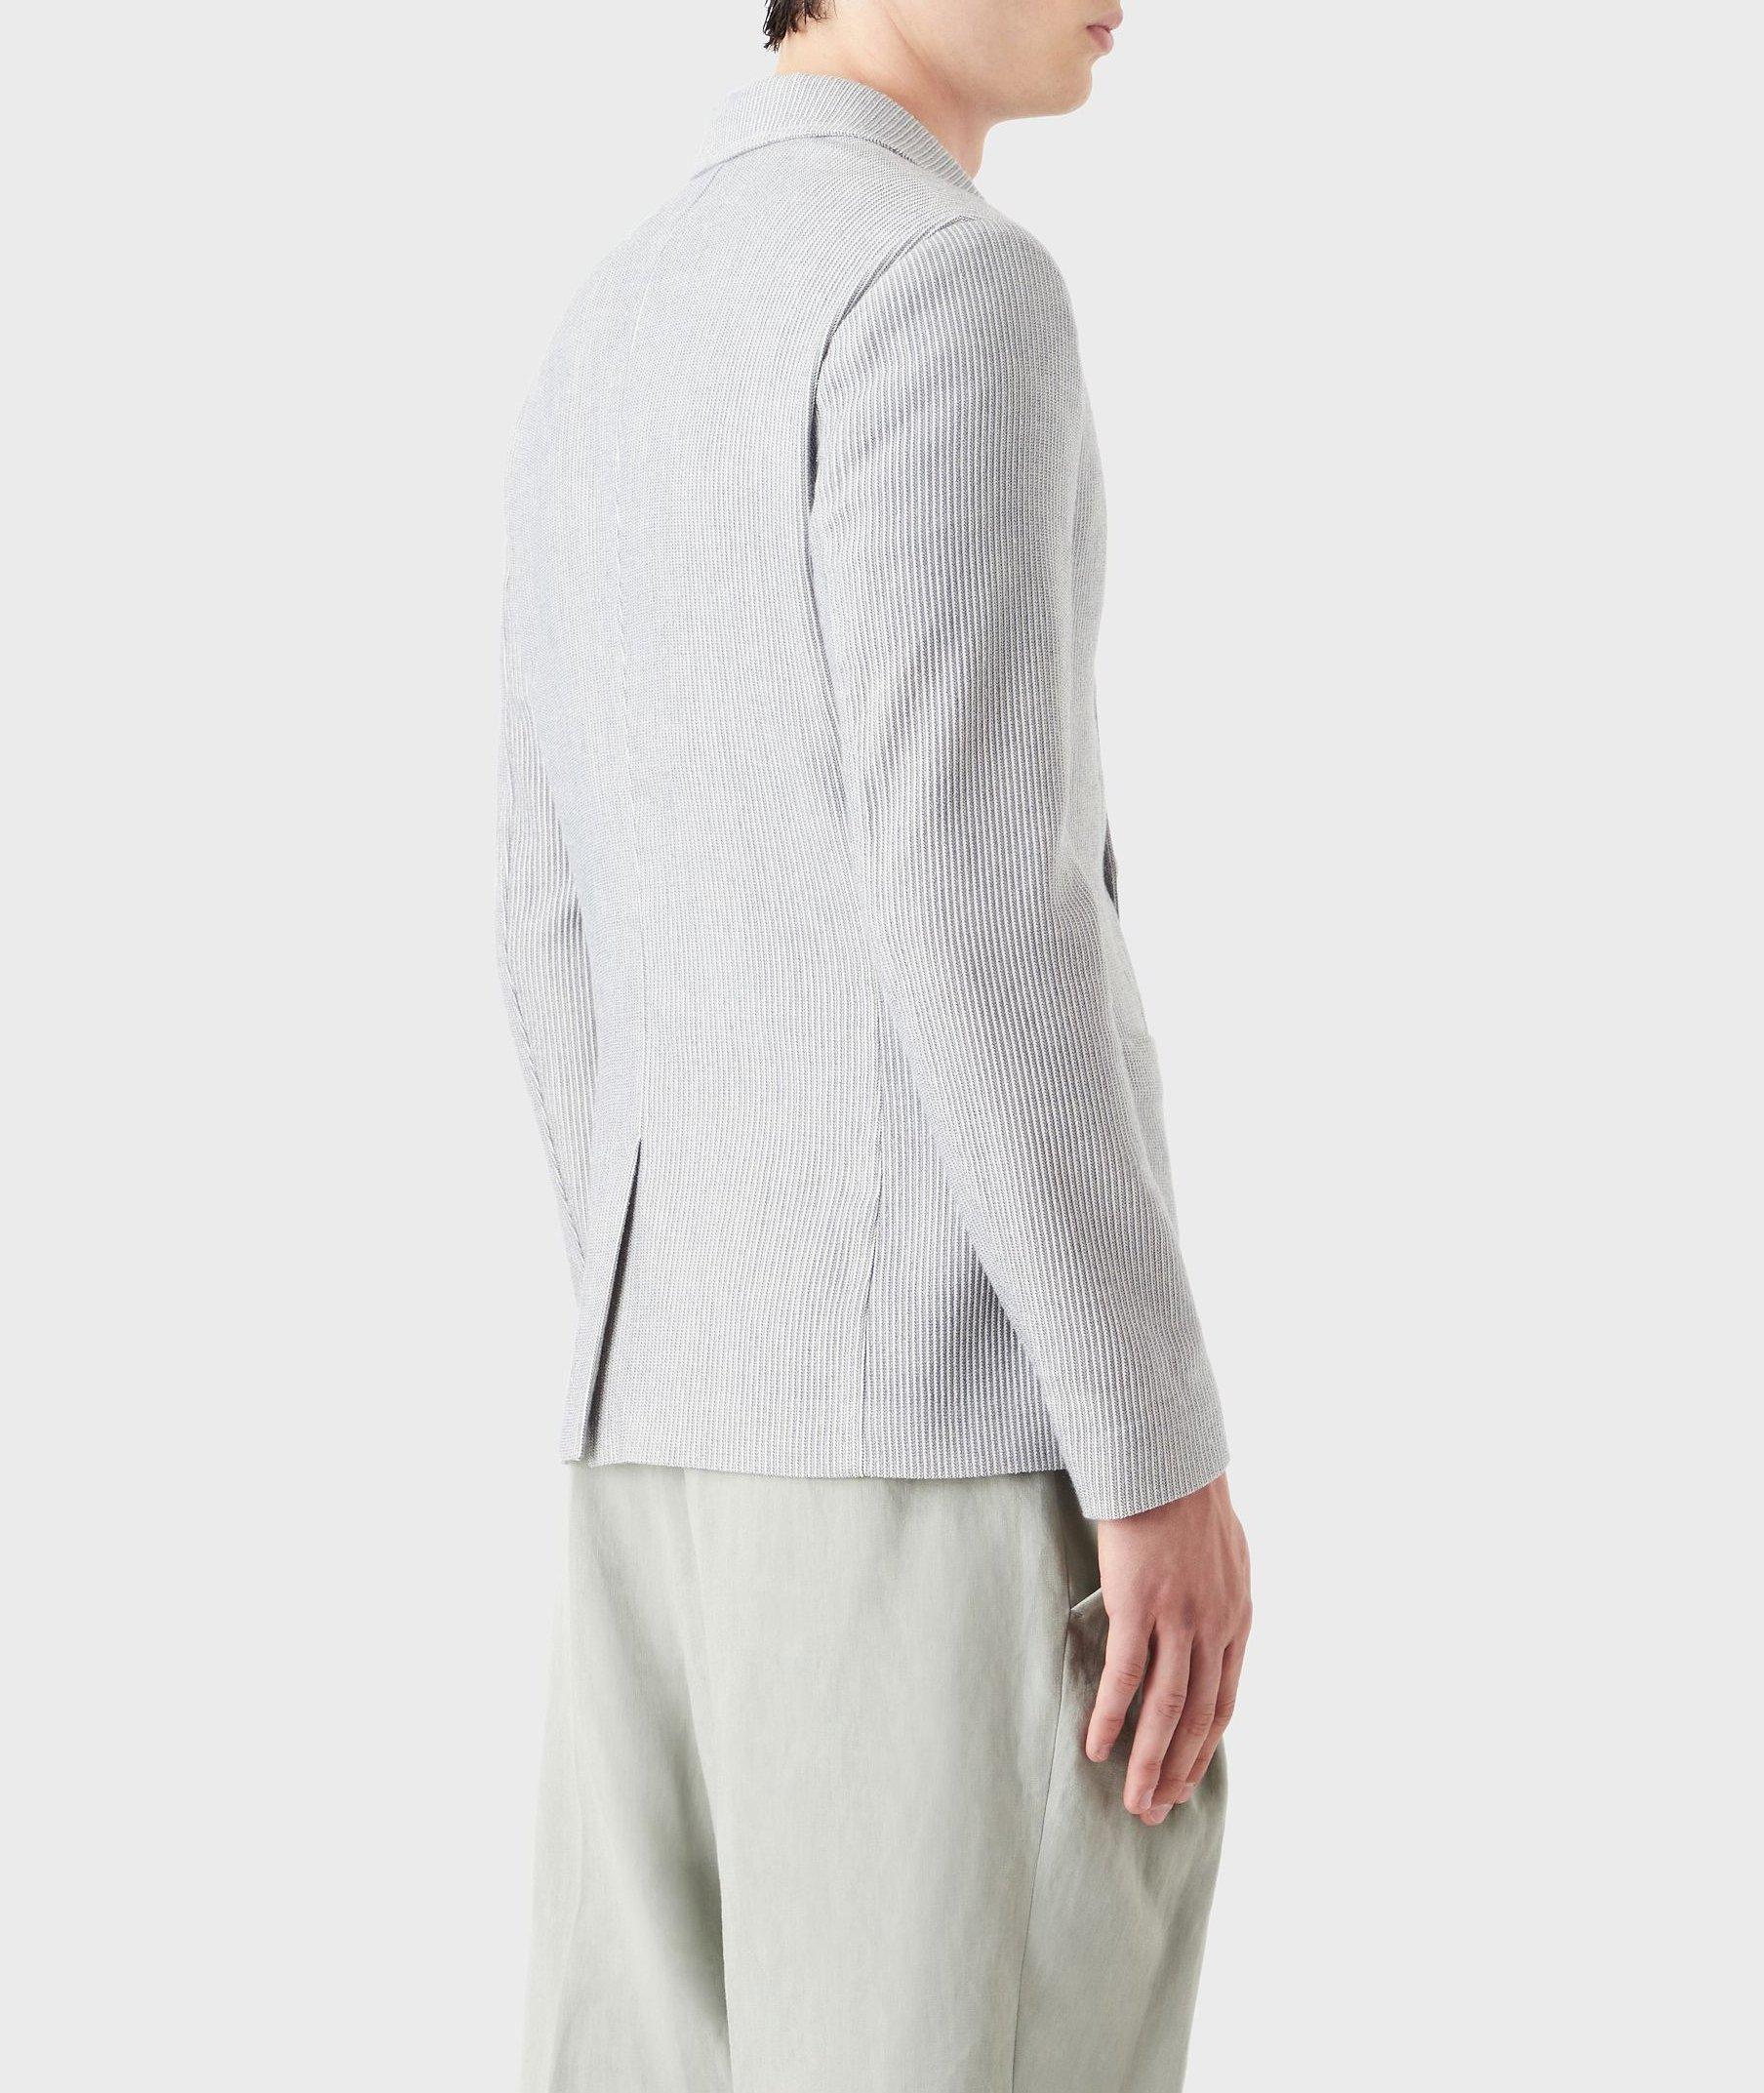 Jacquard Stretch Cashmere-Silk Blend Sport Jacket image 2